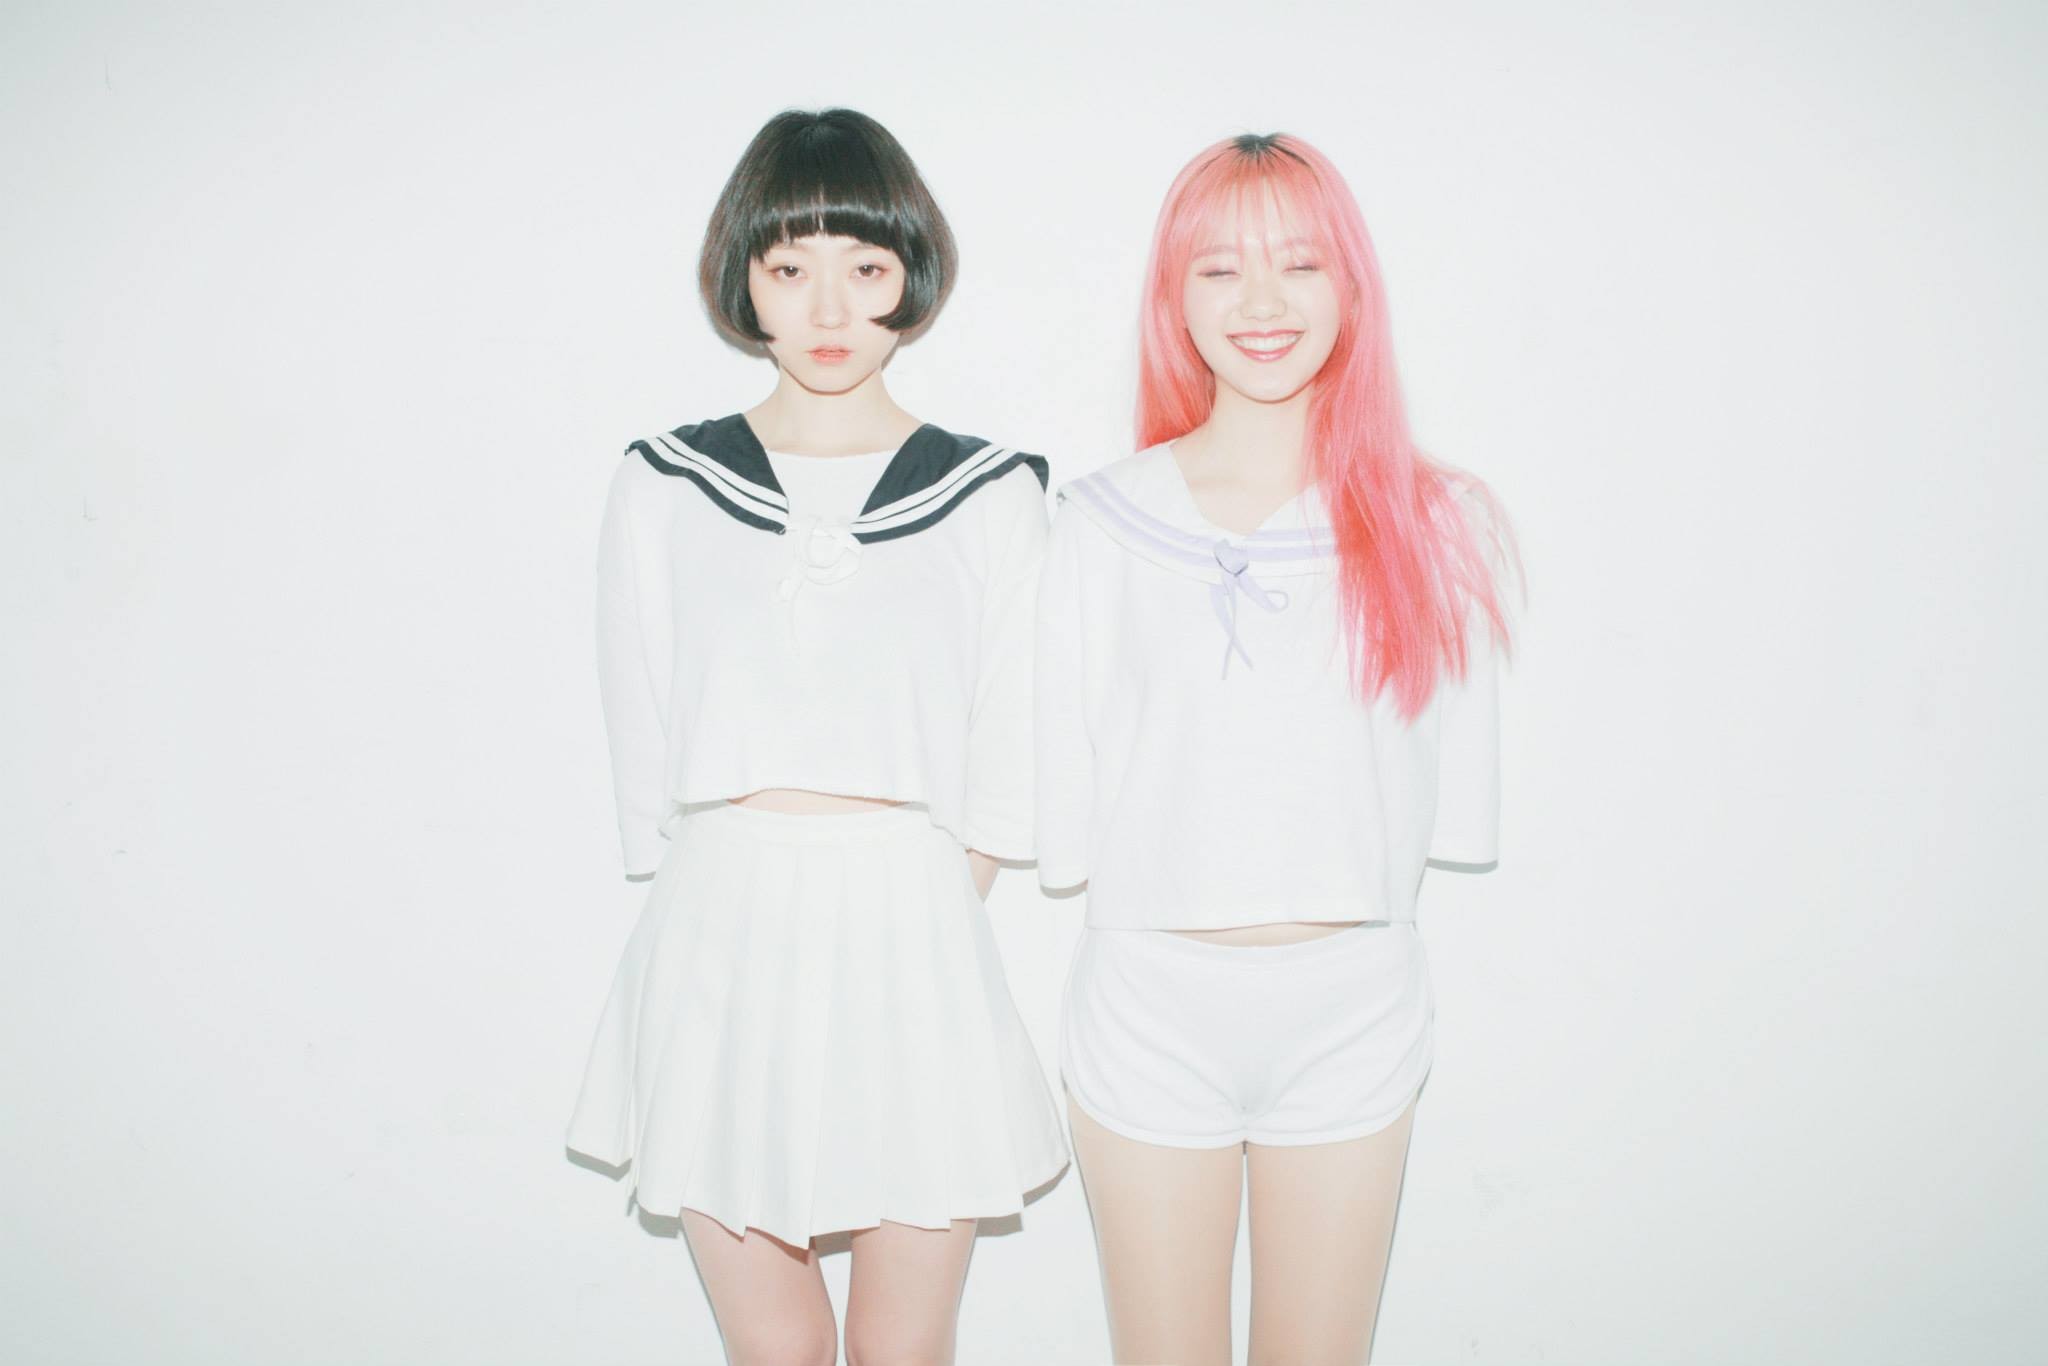 People 2048x1366 Rotta women Asian smiling black hair pink hair women indoors indoors standing white background Korean women school uniform